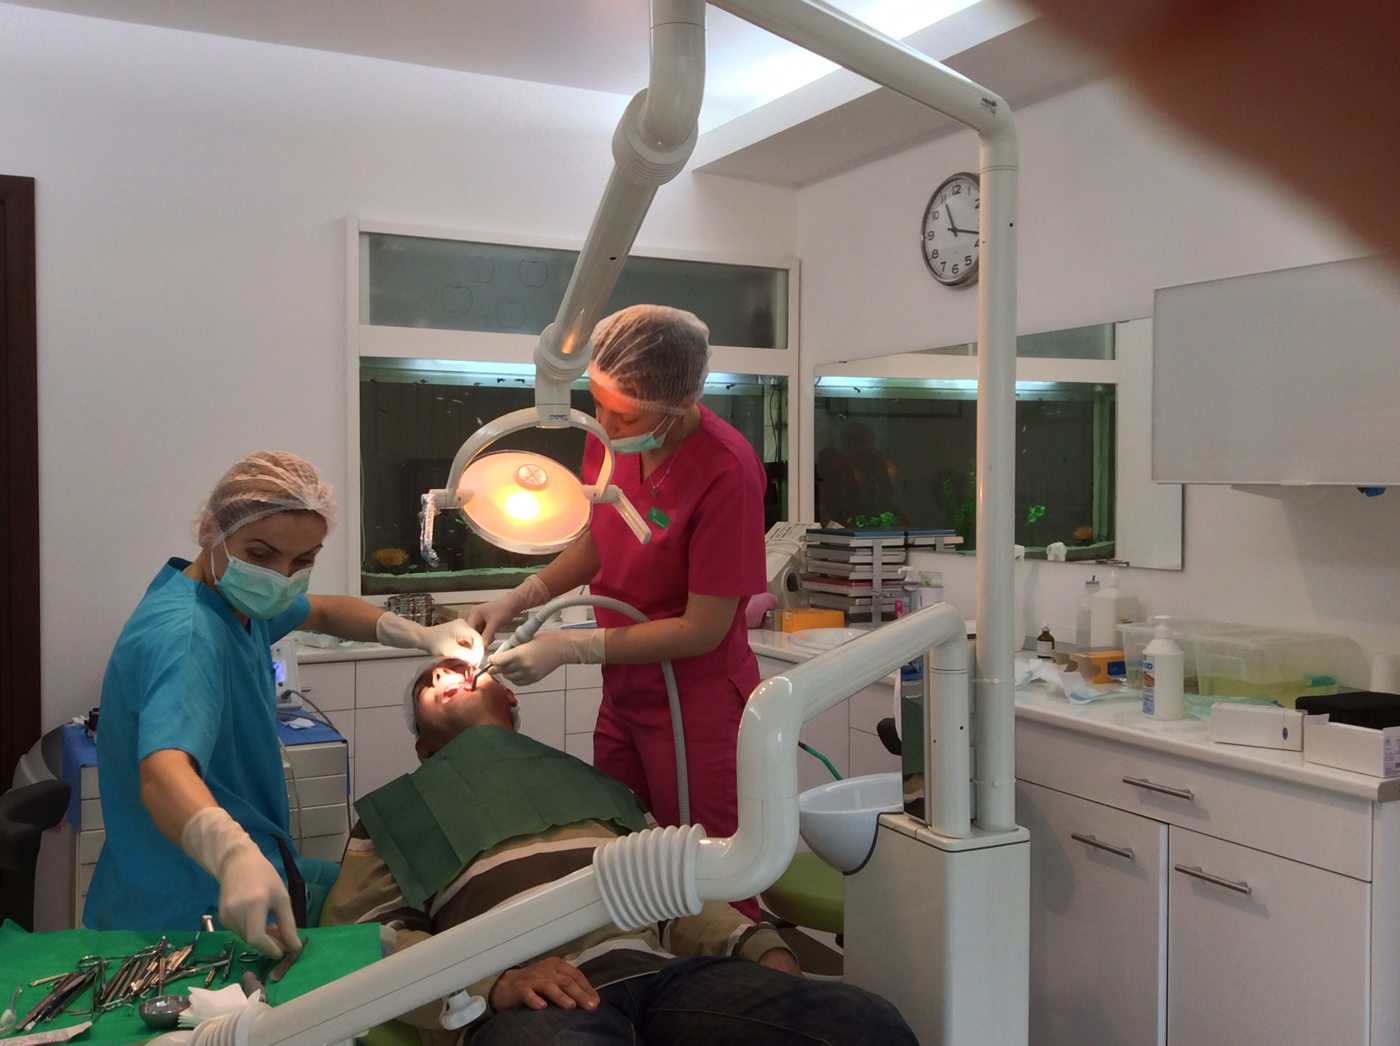 cabinet stomatologic dreossi dental